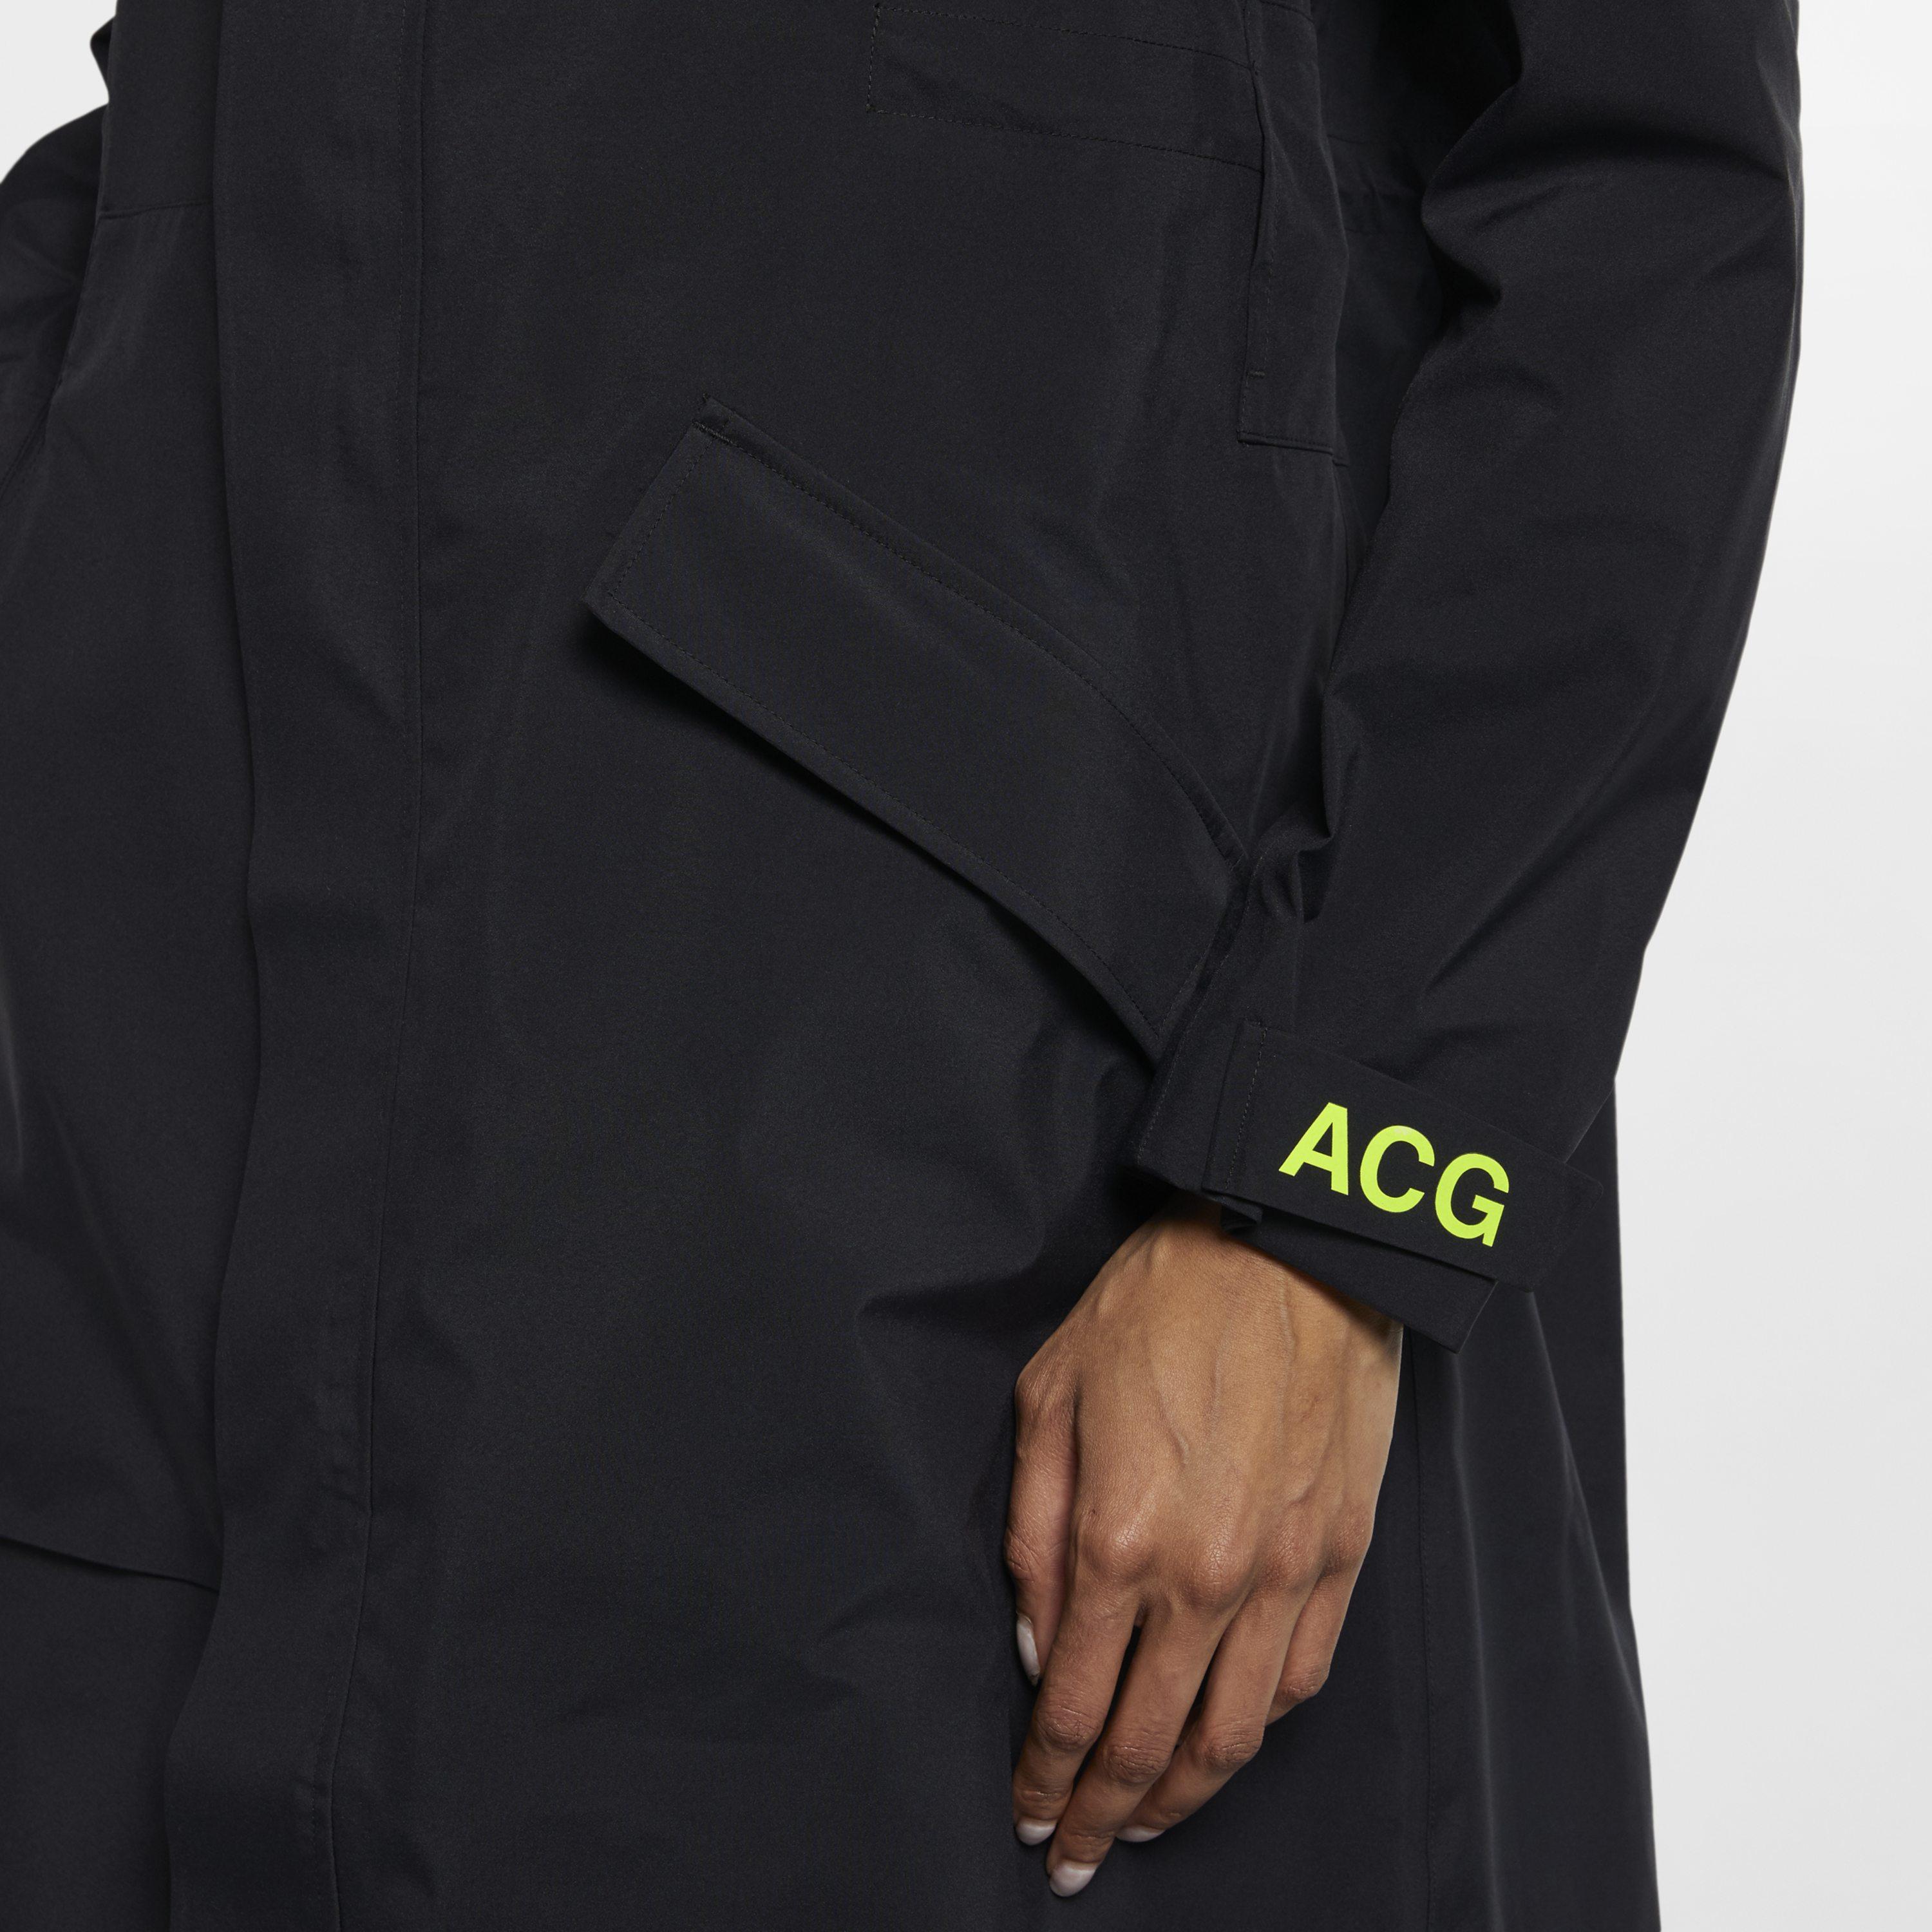 Nike Lab Acg Gore-tex Womens Jacket in Black - Lyst